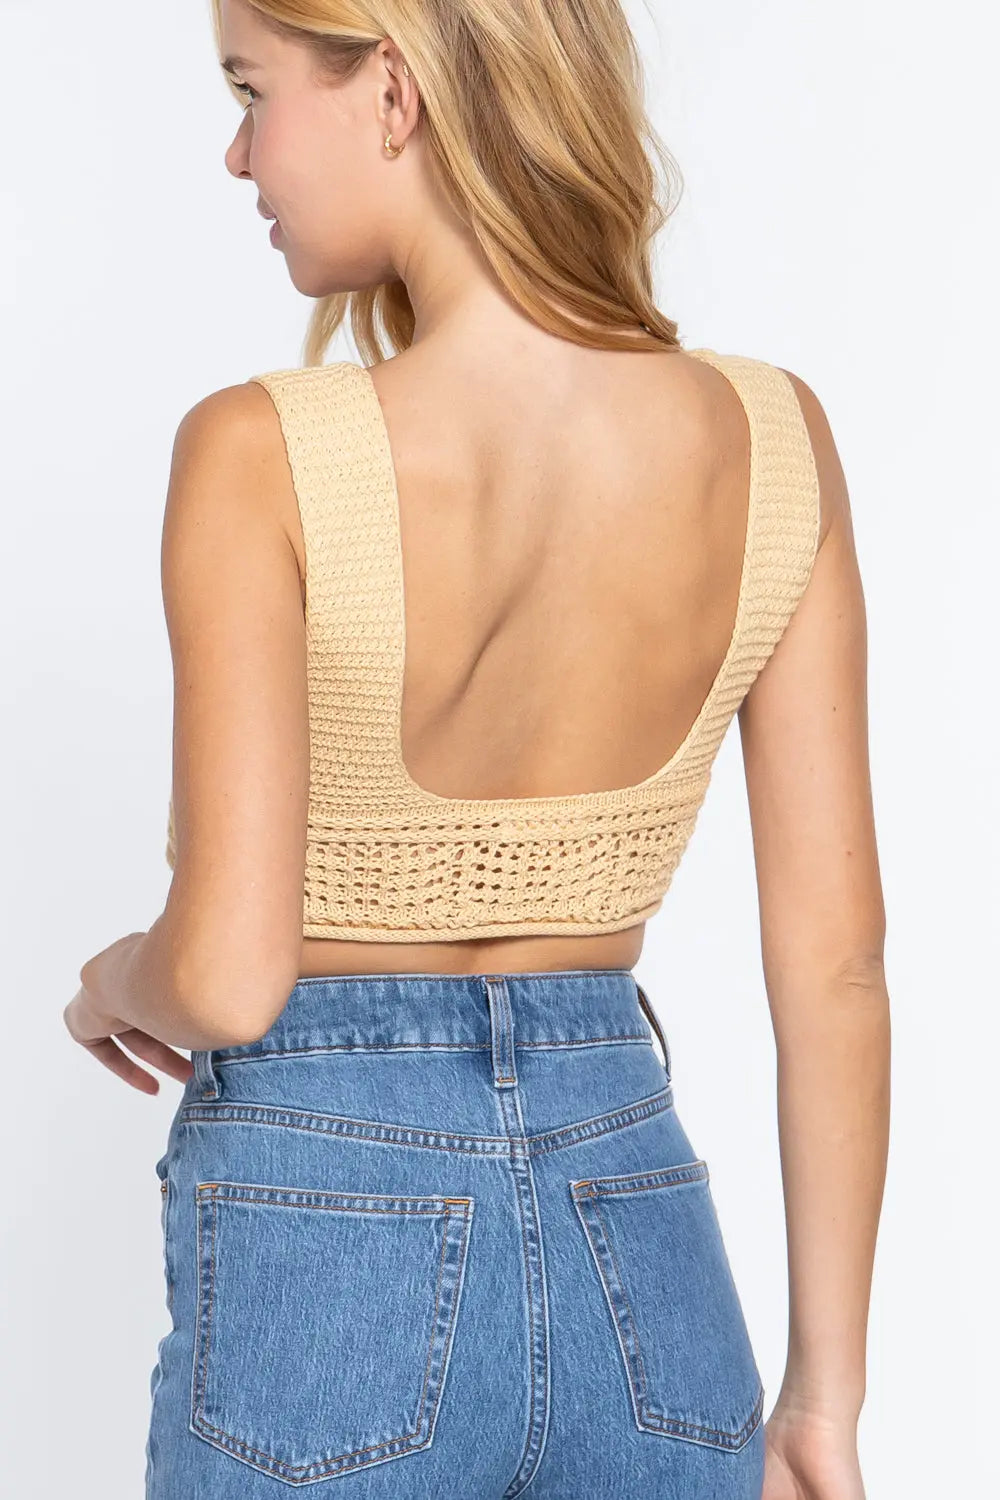 Textured Crop Sweater Tank Top Sunny EvE Fashion